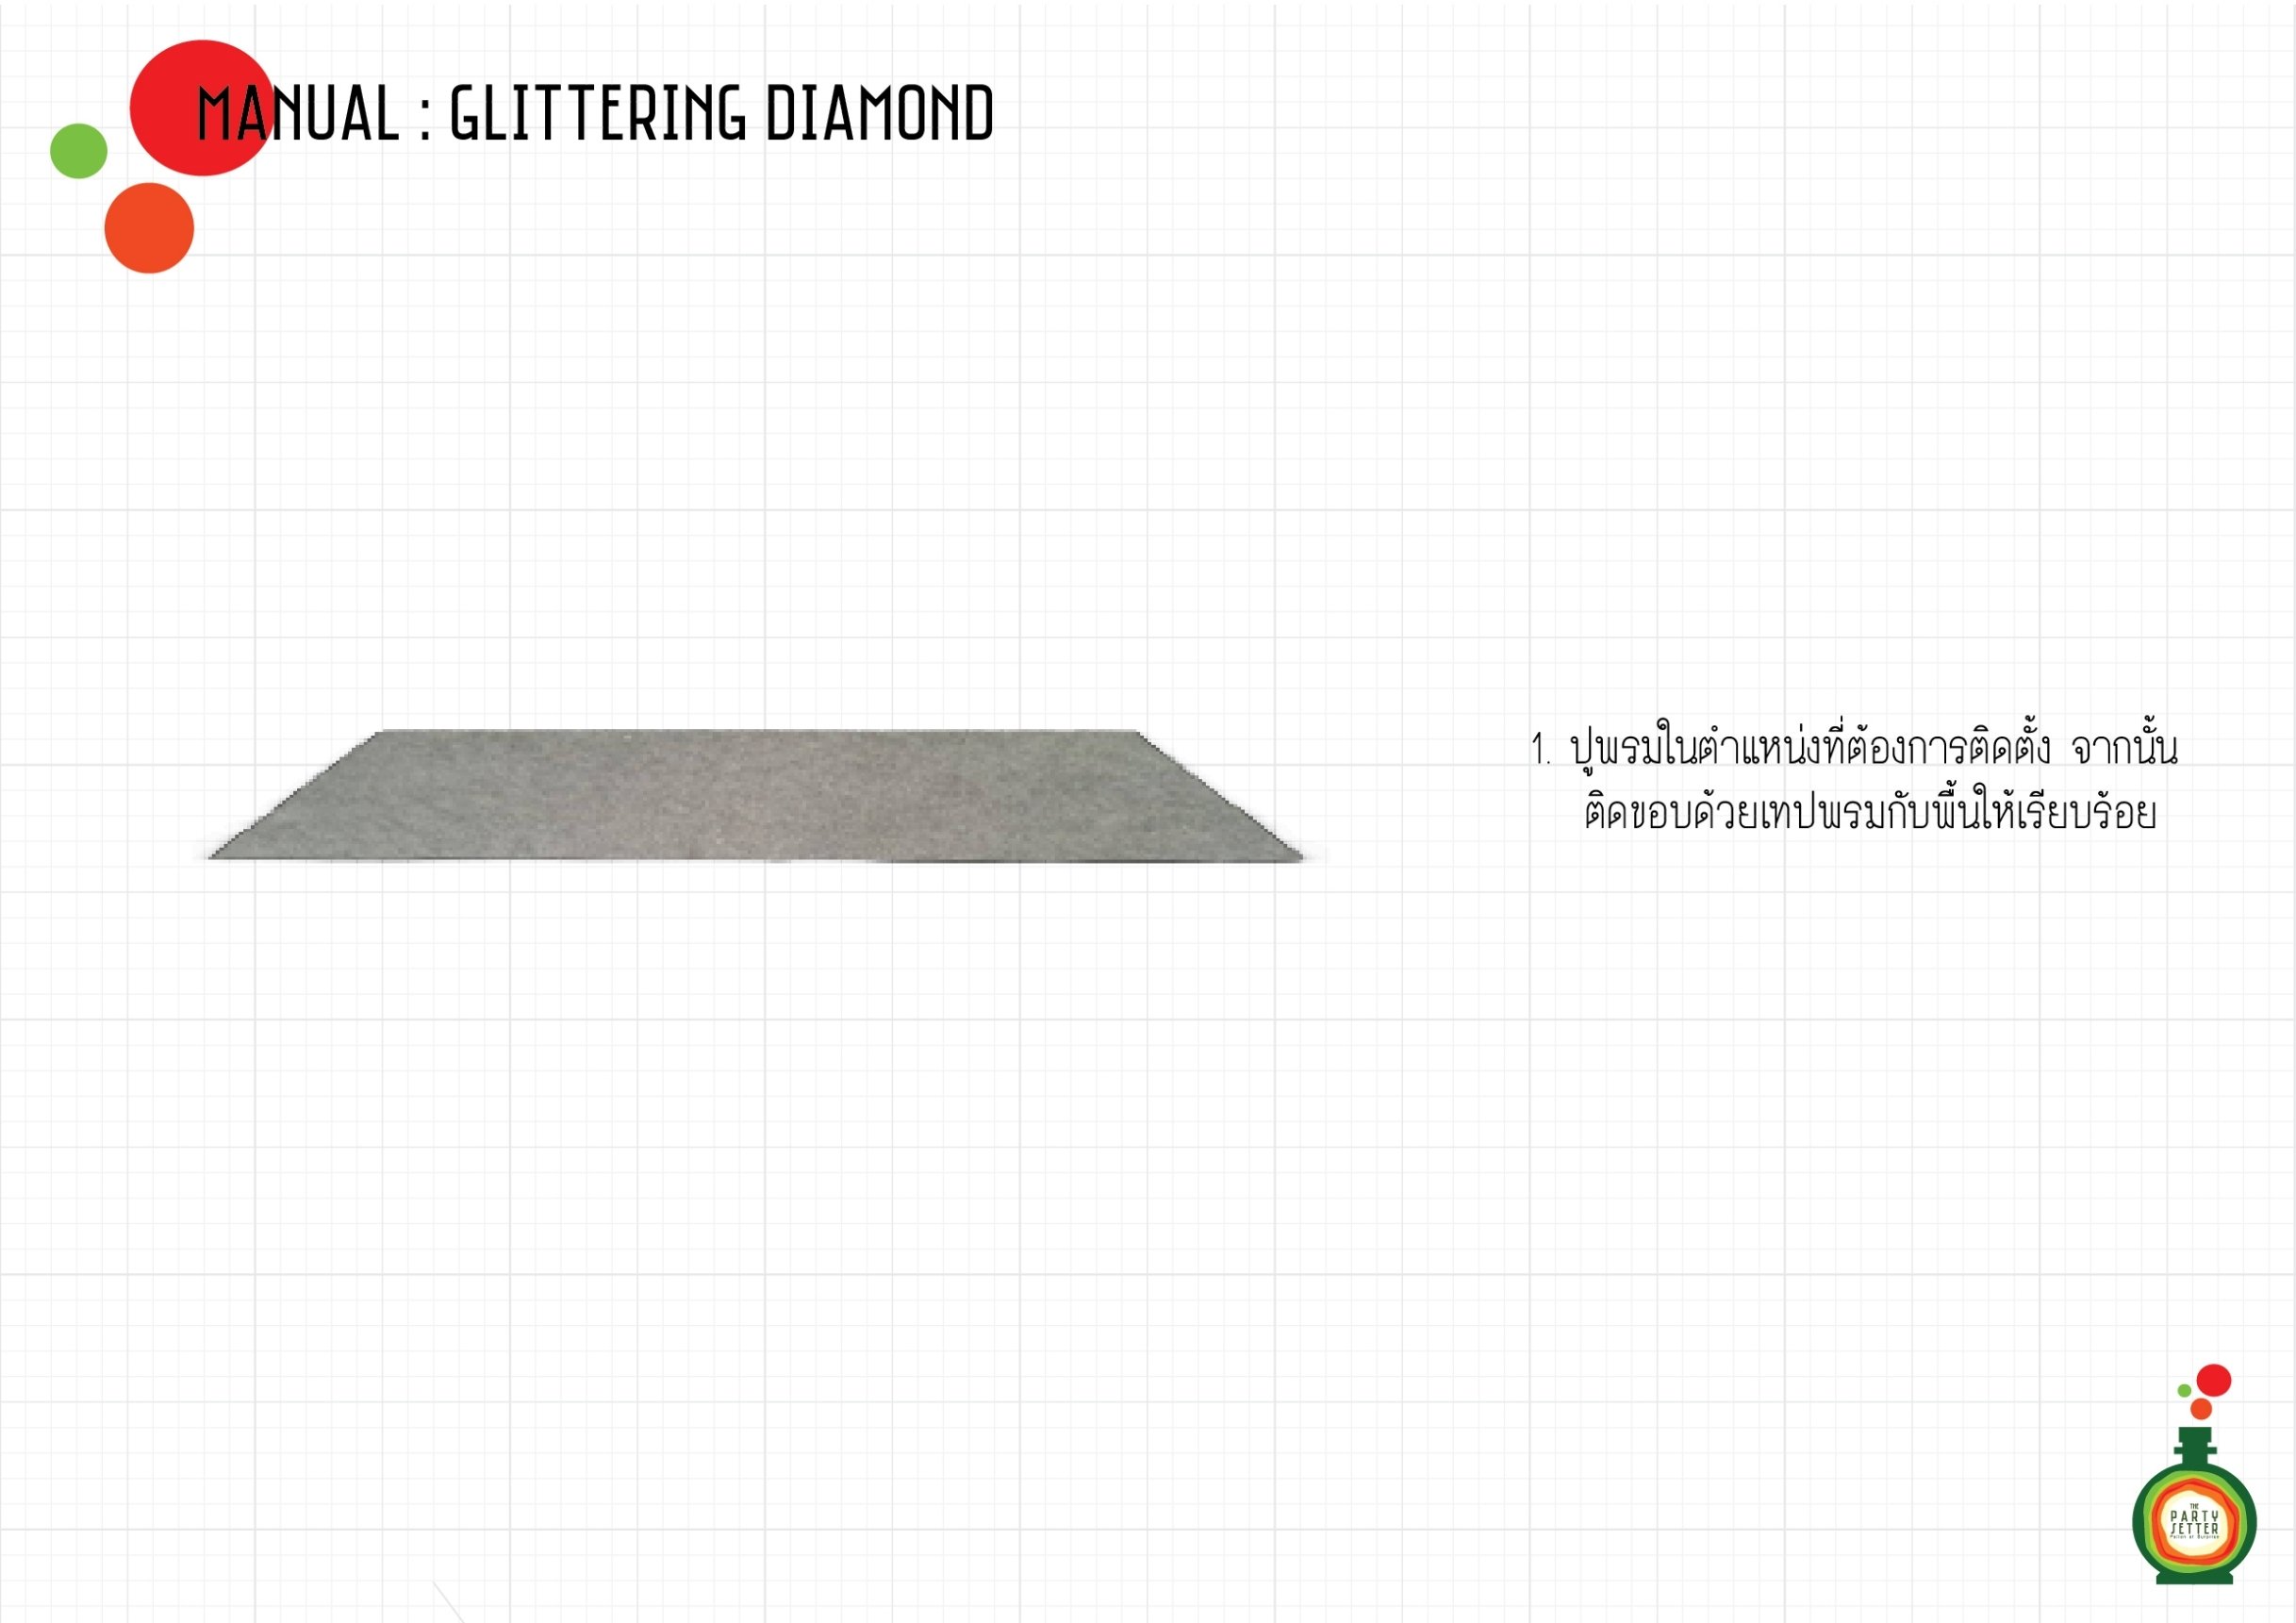 Manual_Glittering Diamond-01-01.jpg